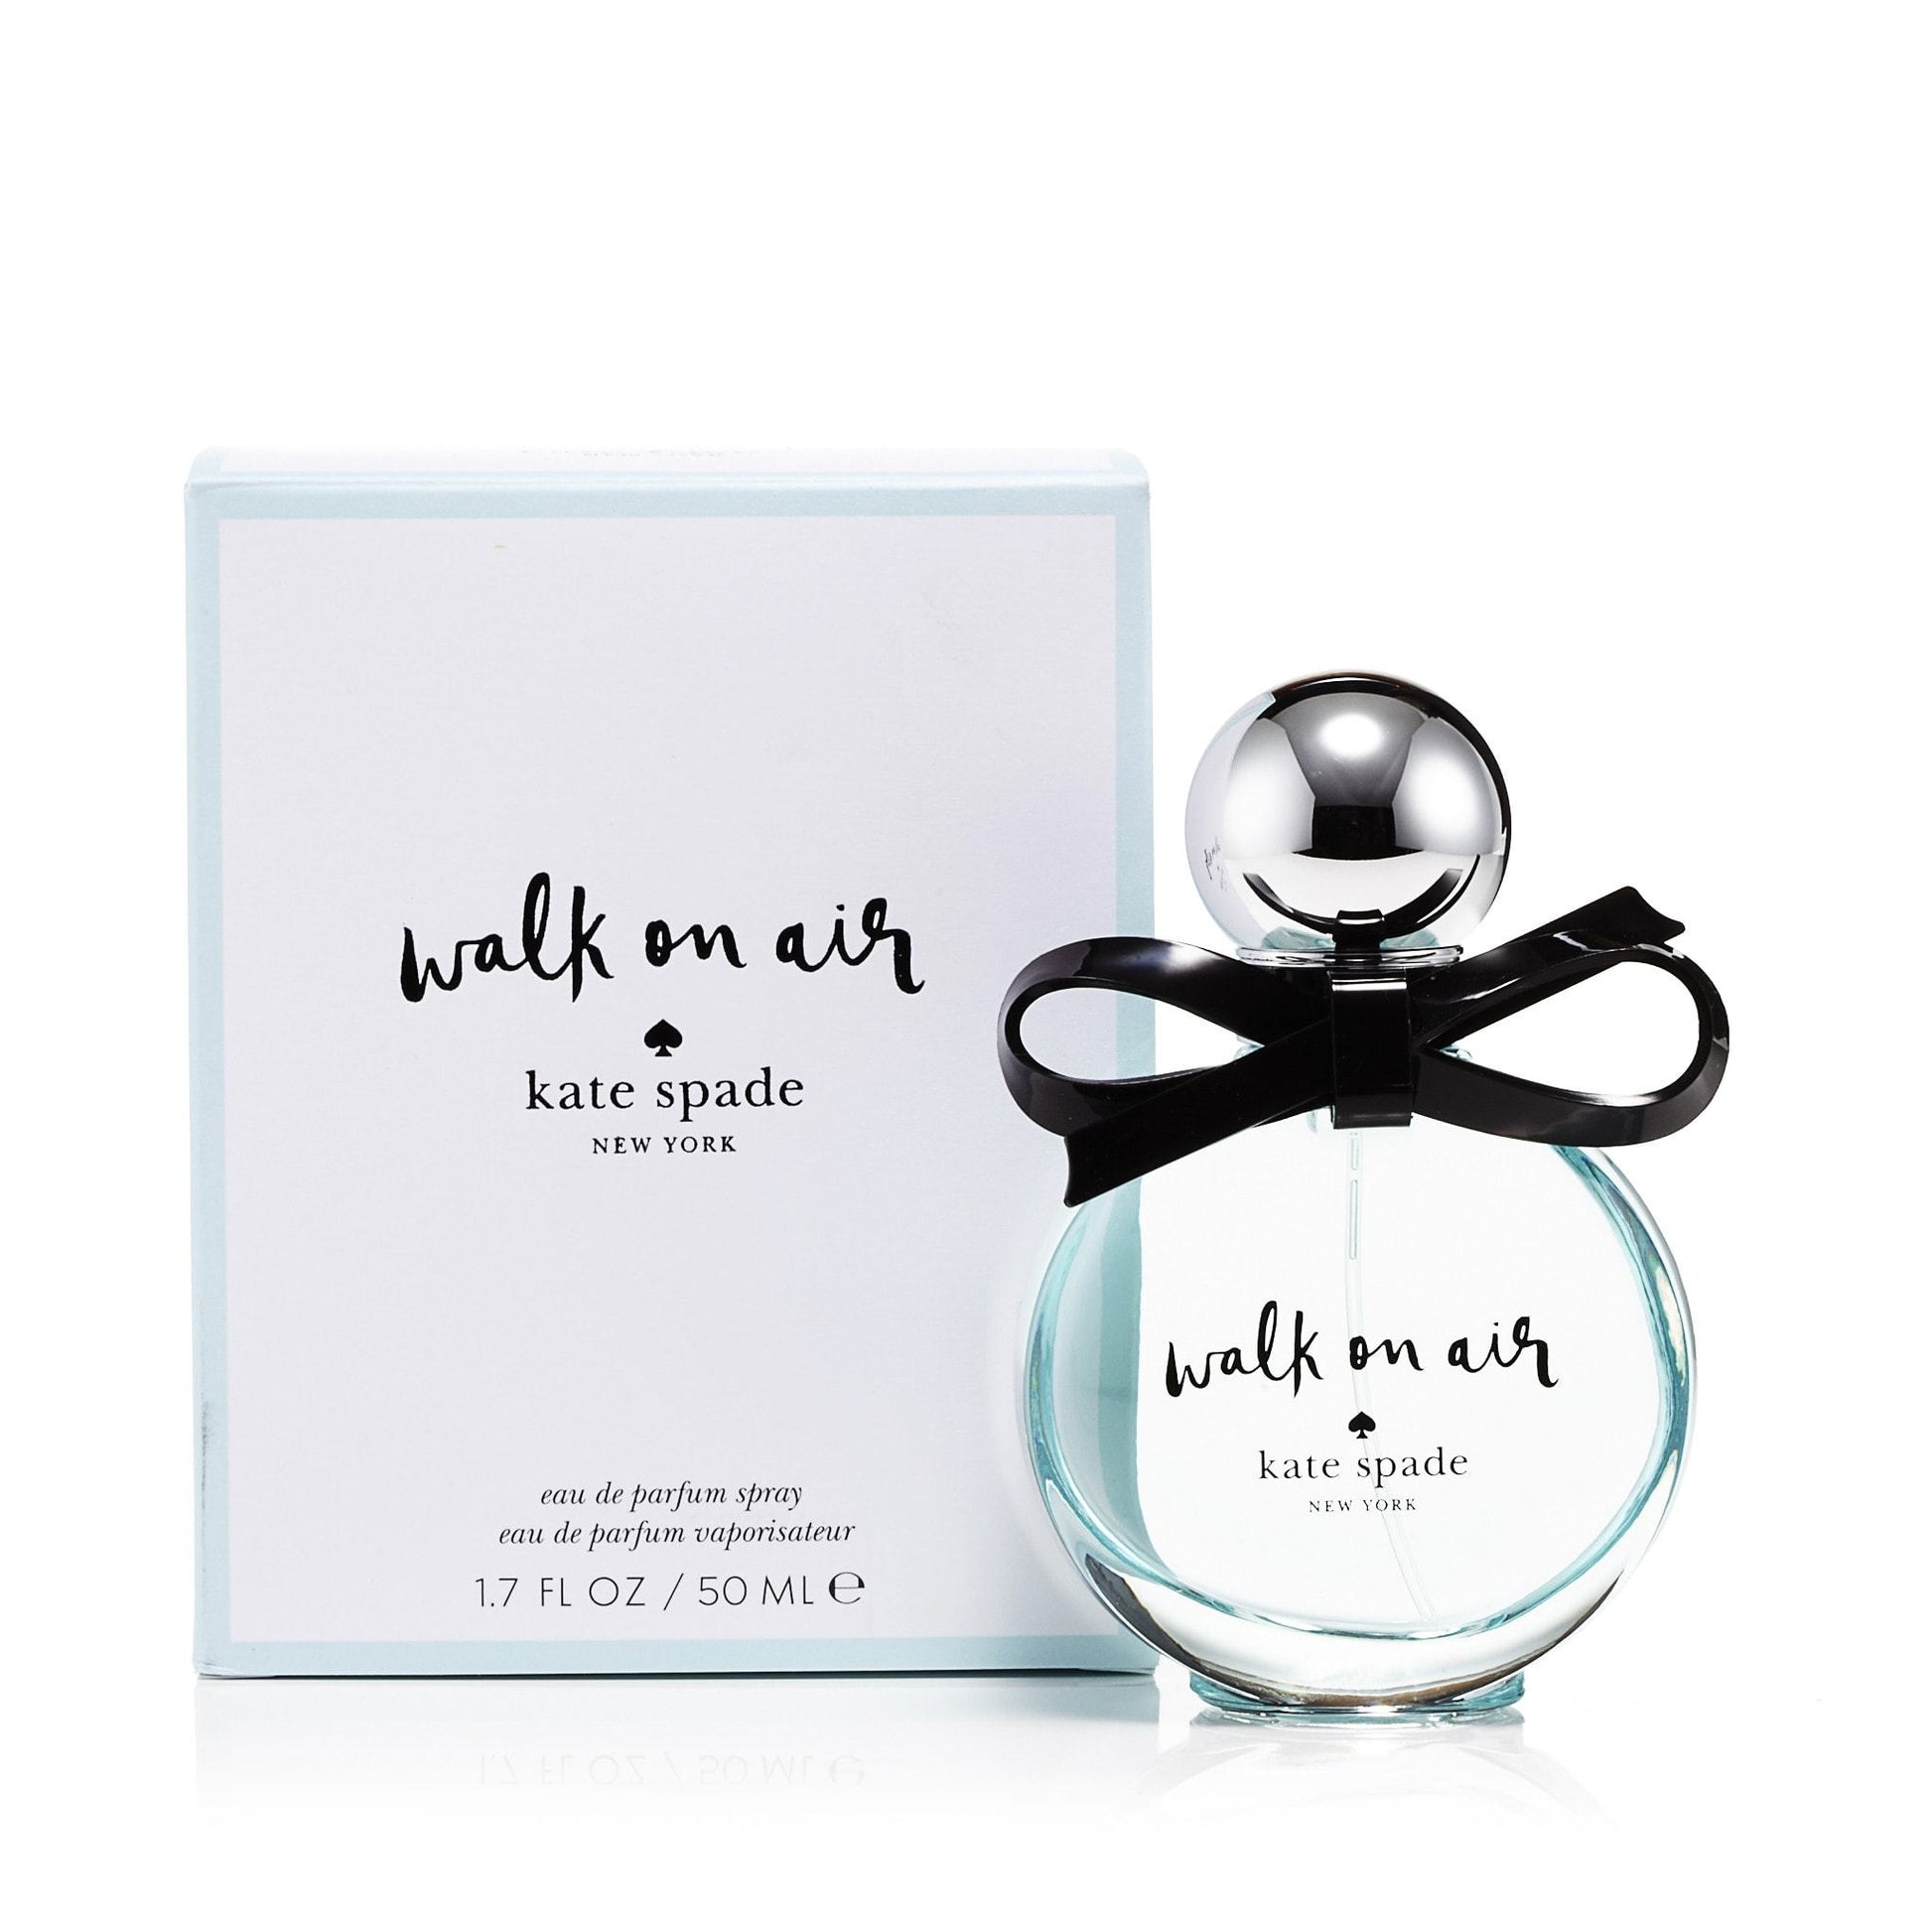 Walk on Air Eau de Parfum Spray for Women by Kate Spade, Product image 4